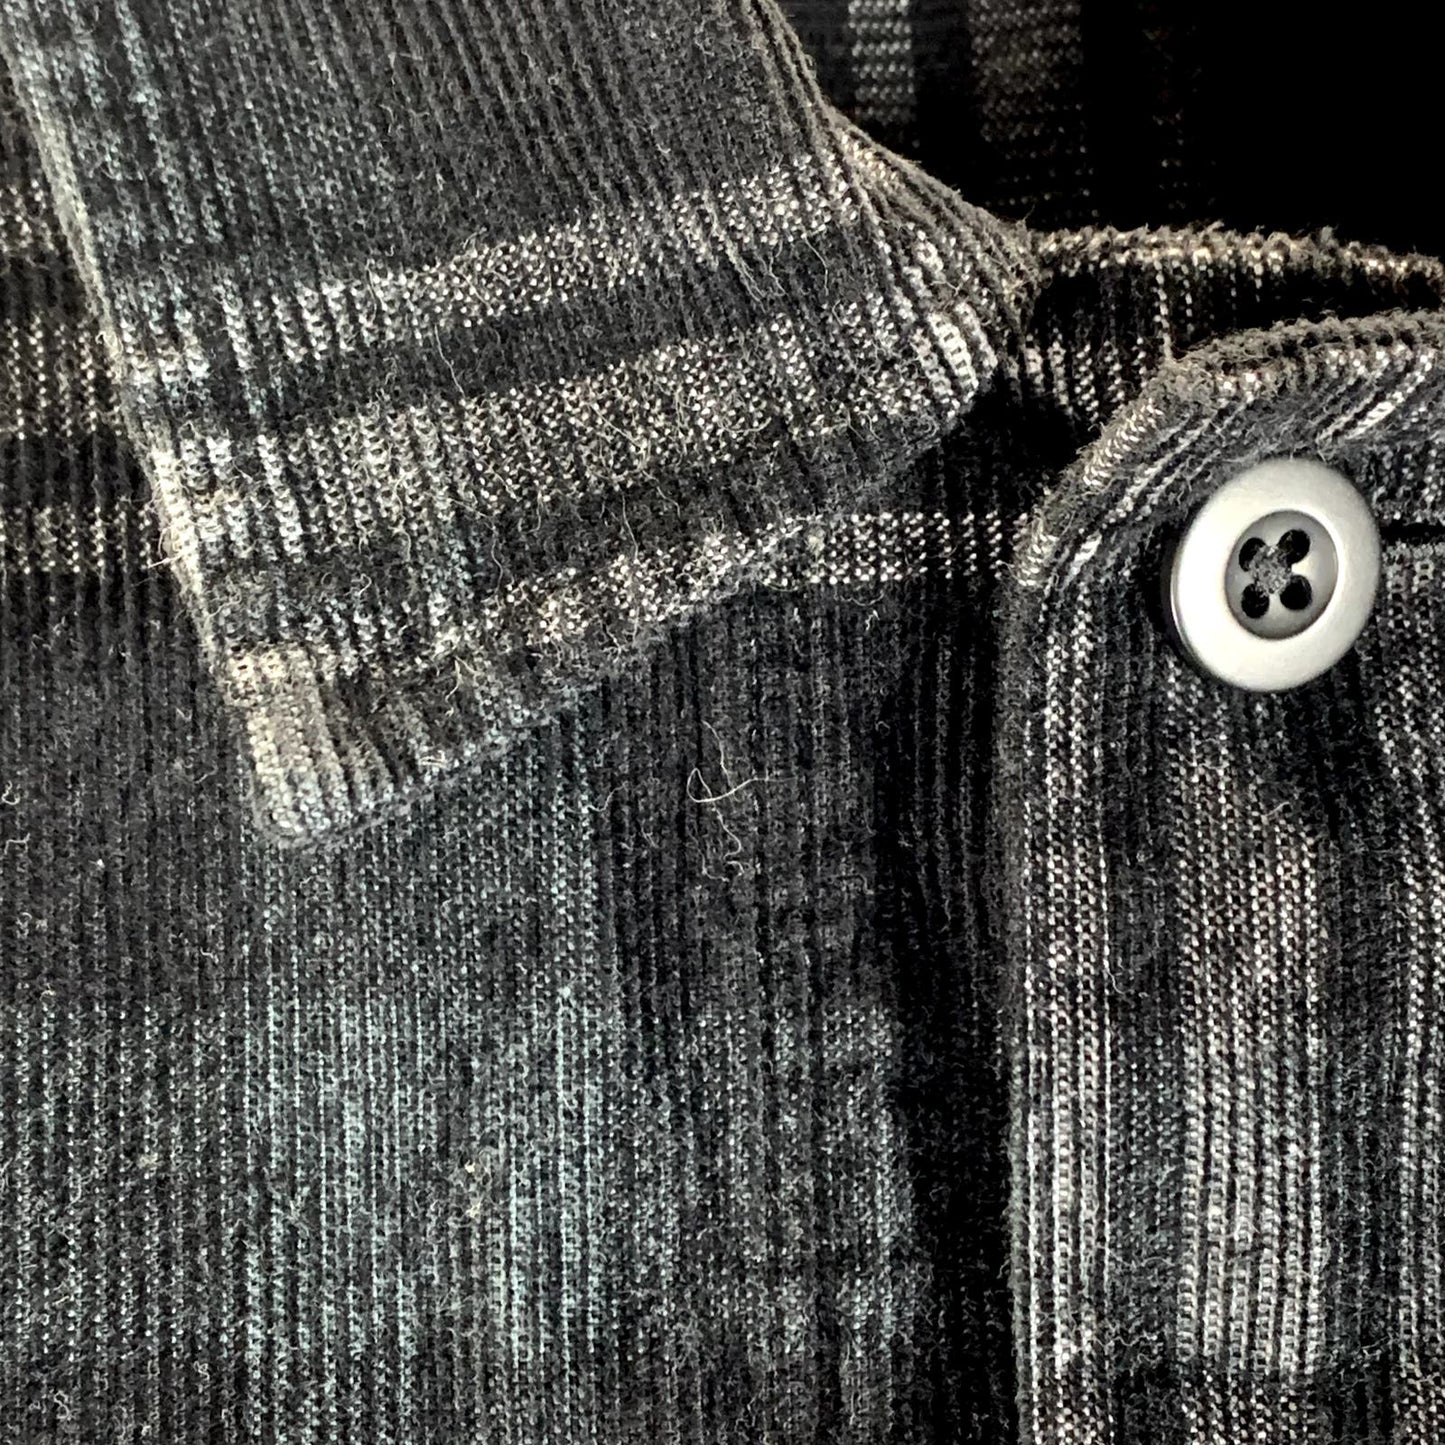 MADEWELL Men's Black Plaid Corduroy Button-Up Long Sleeve Shirt SZ M